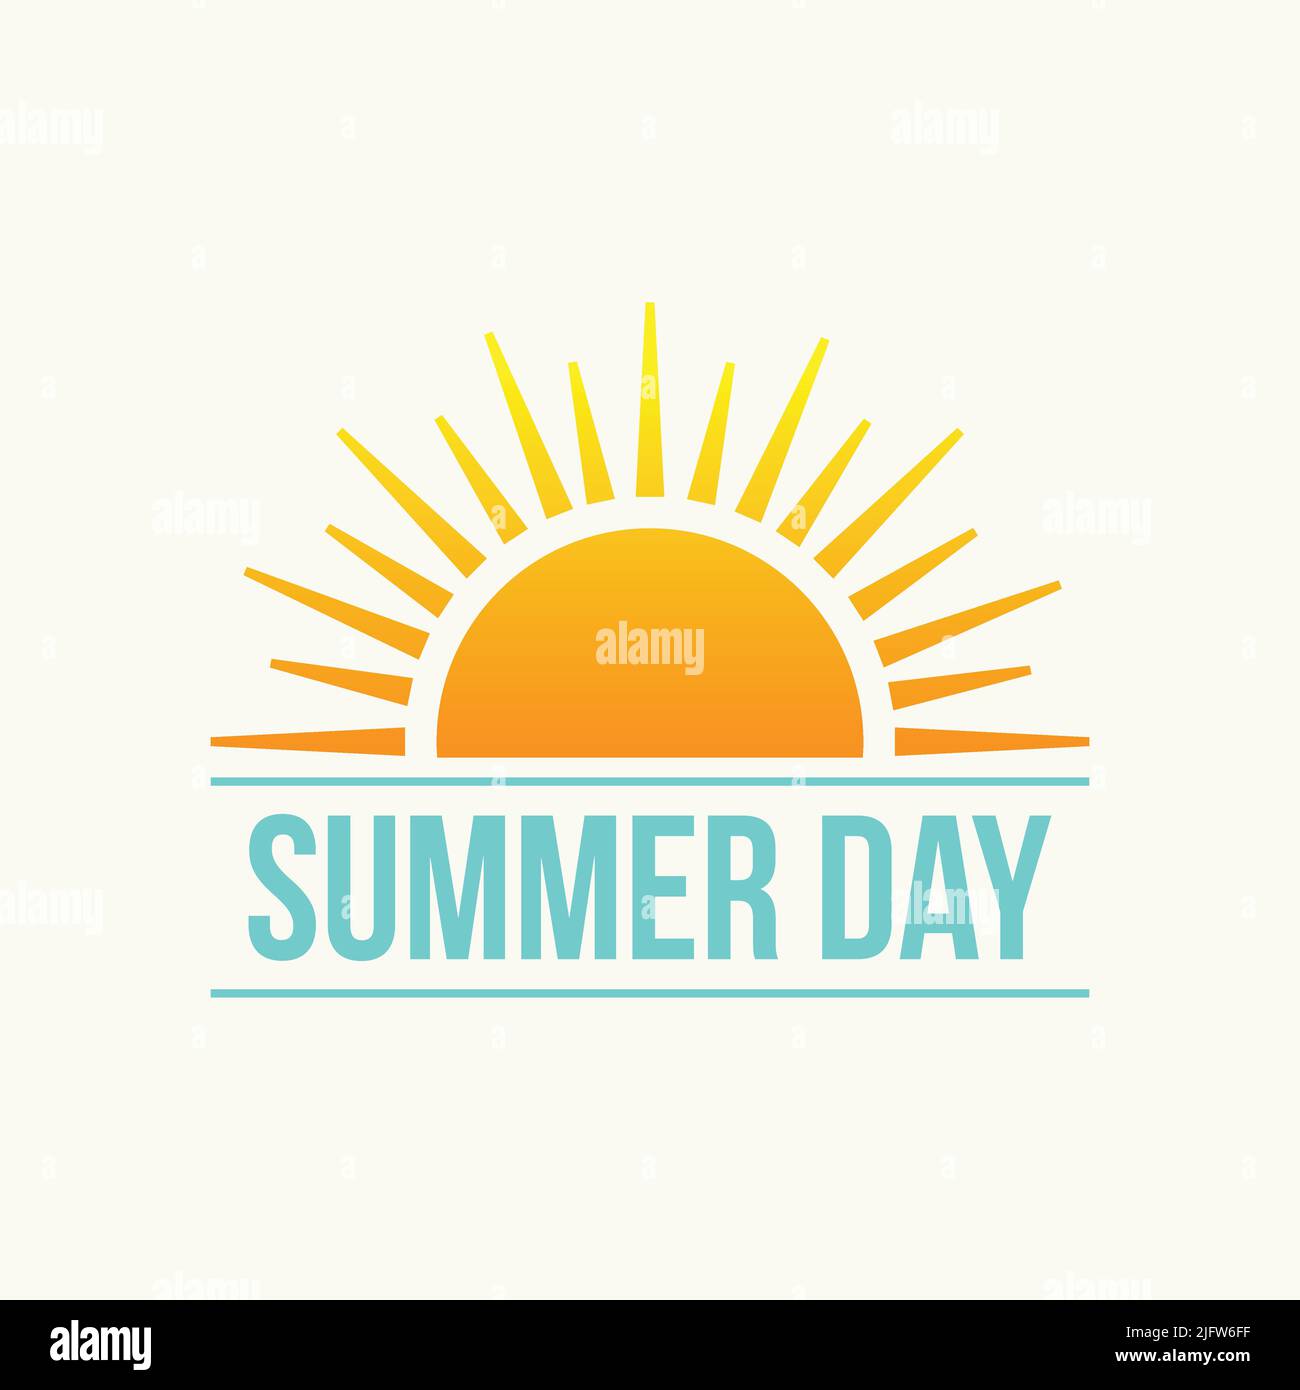 Hello summer image typography vector design image. Summer day theme vector image design illustration Stock Vector